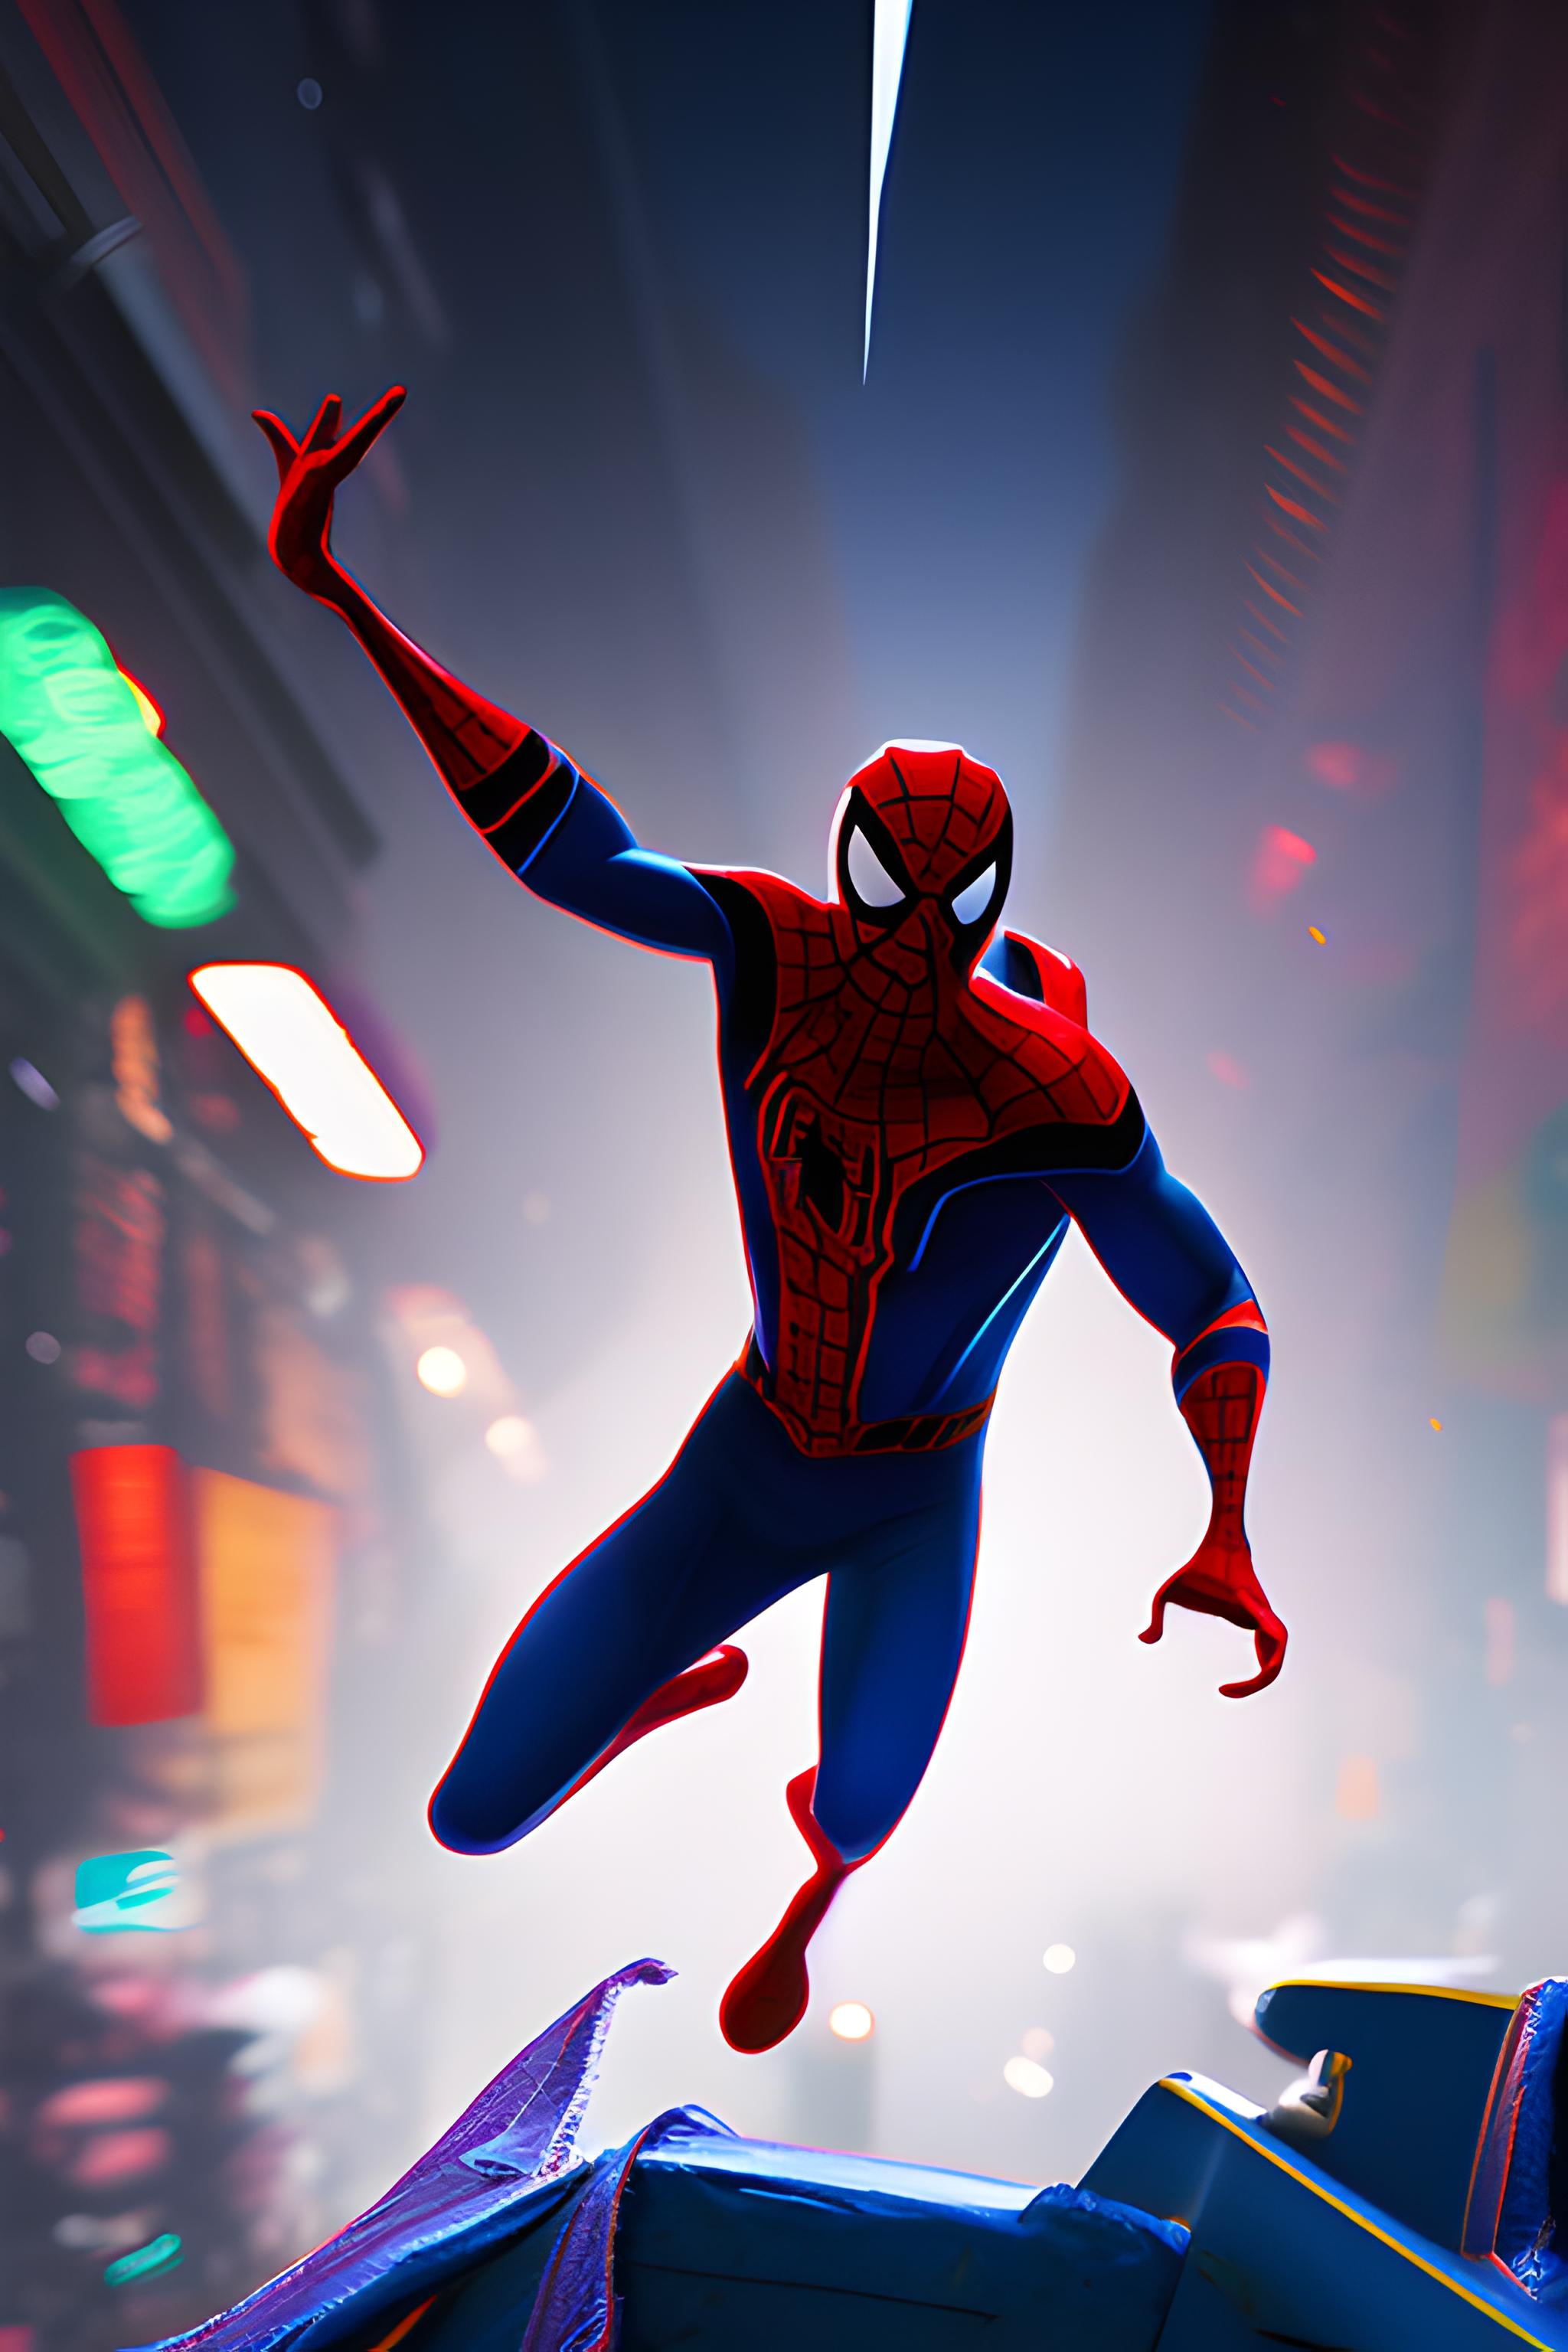 Spider-Man: Across the spider-verse